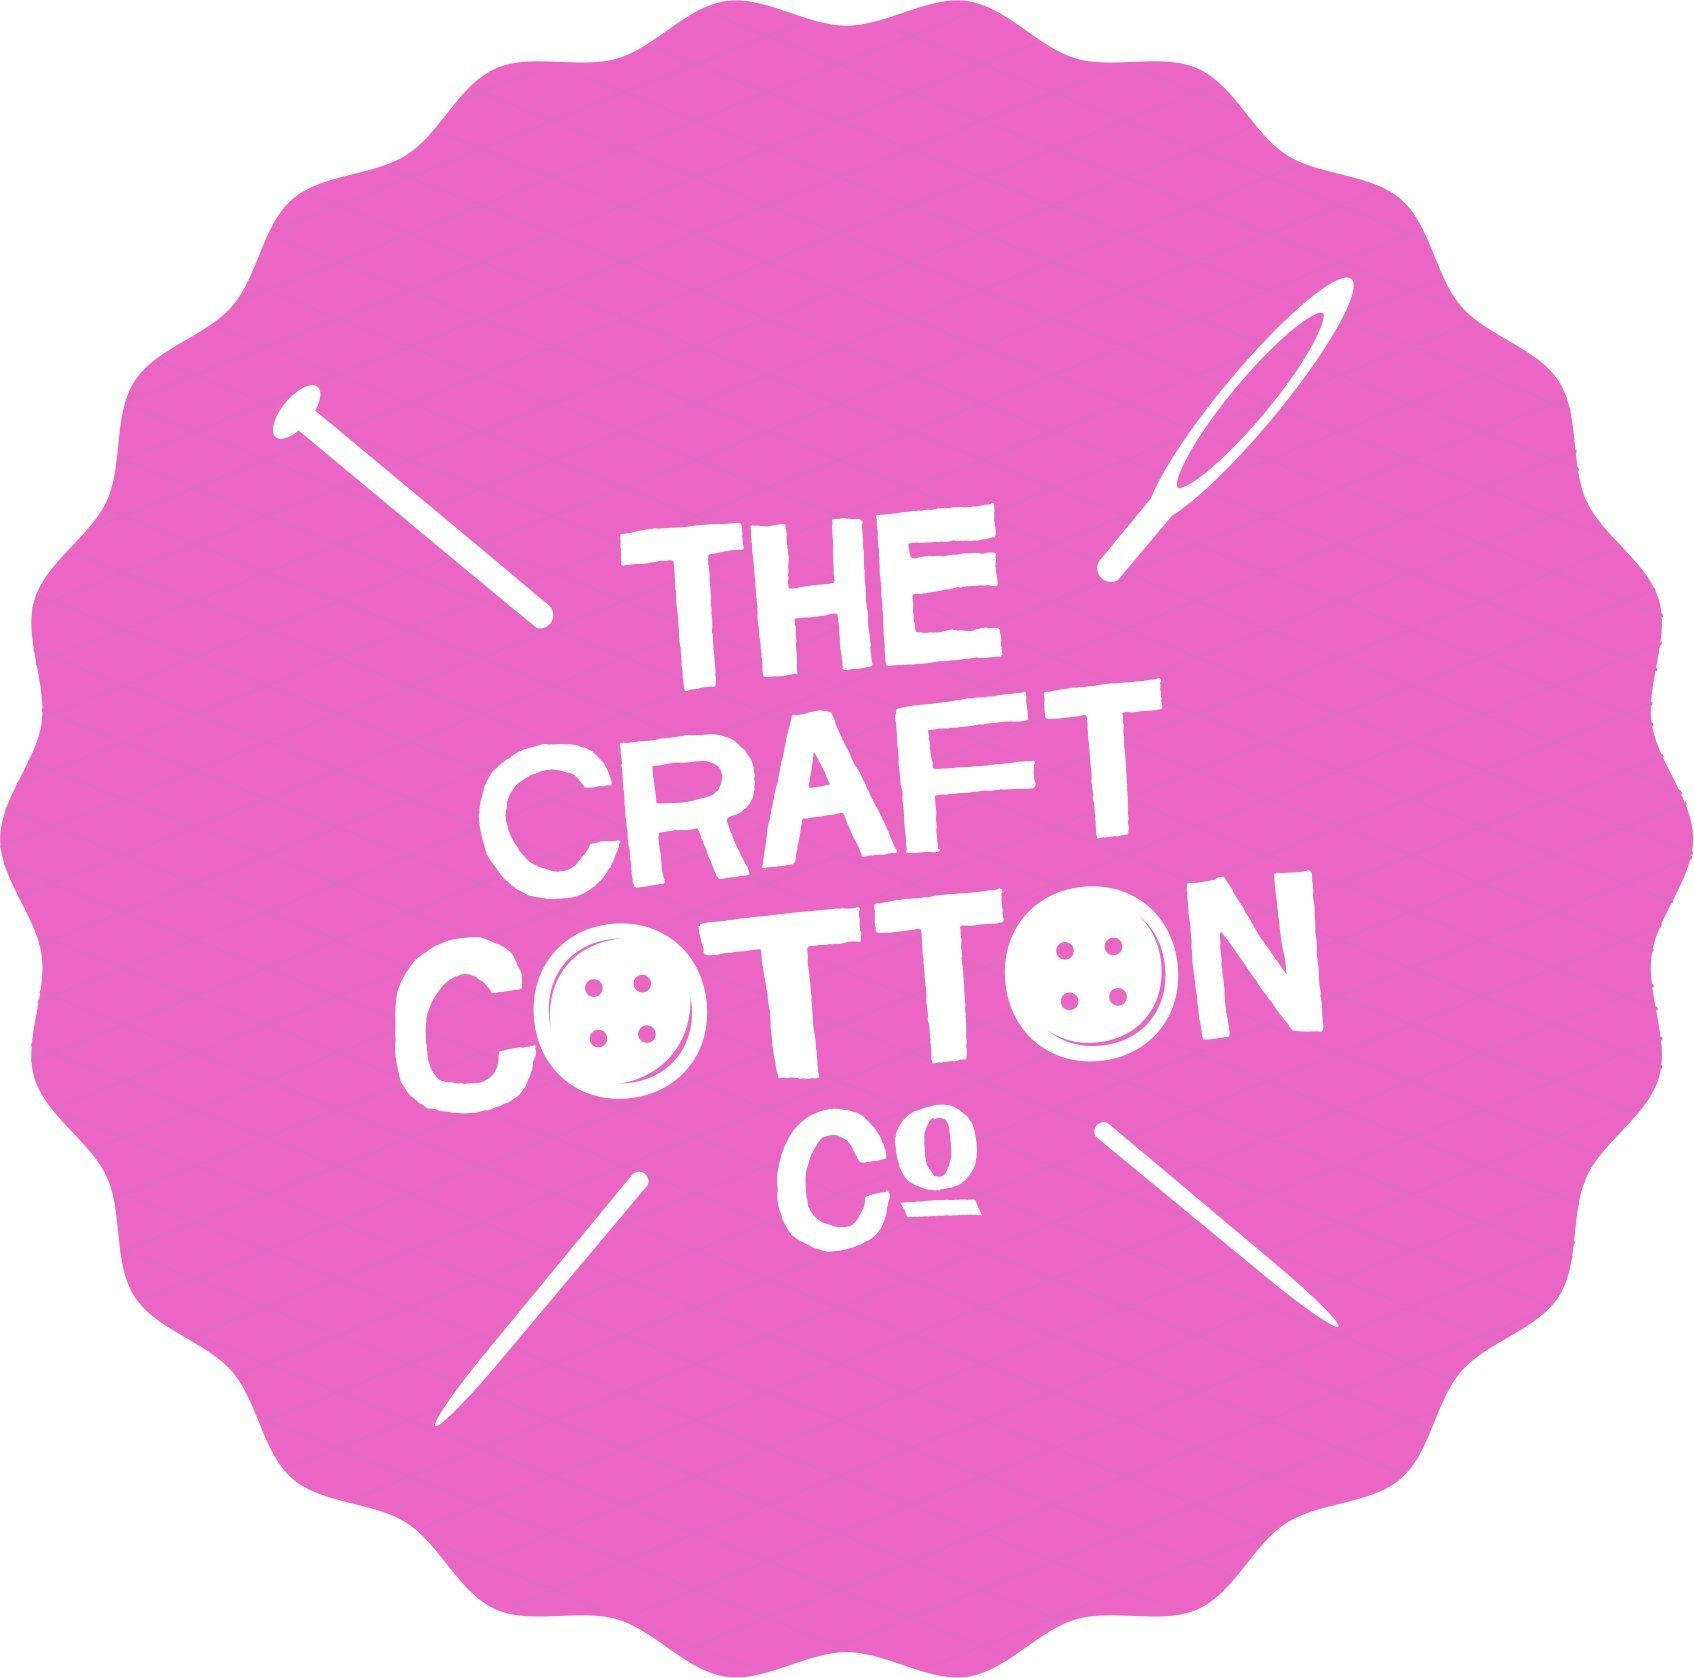 Craft Cotton